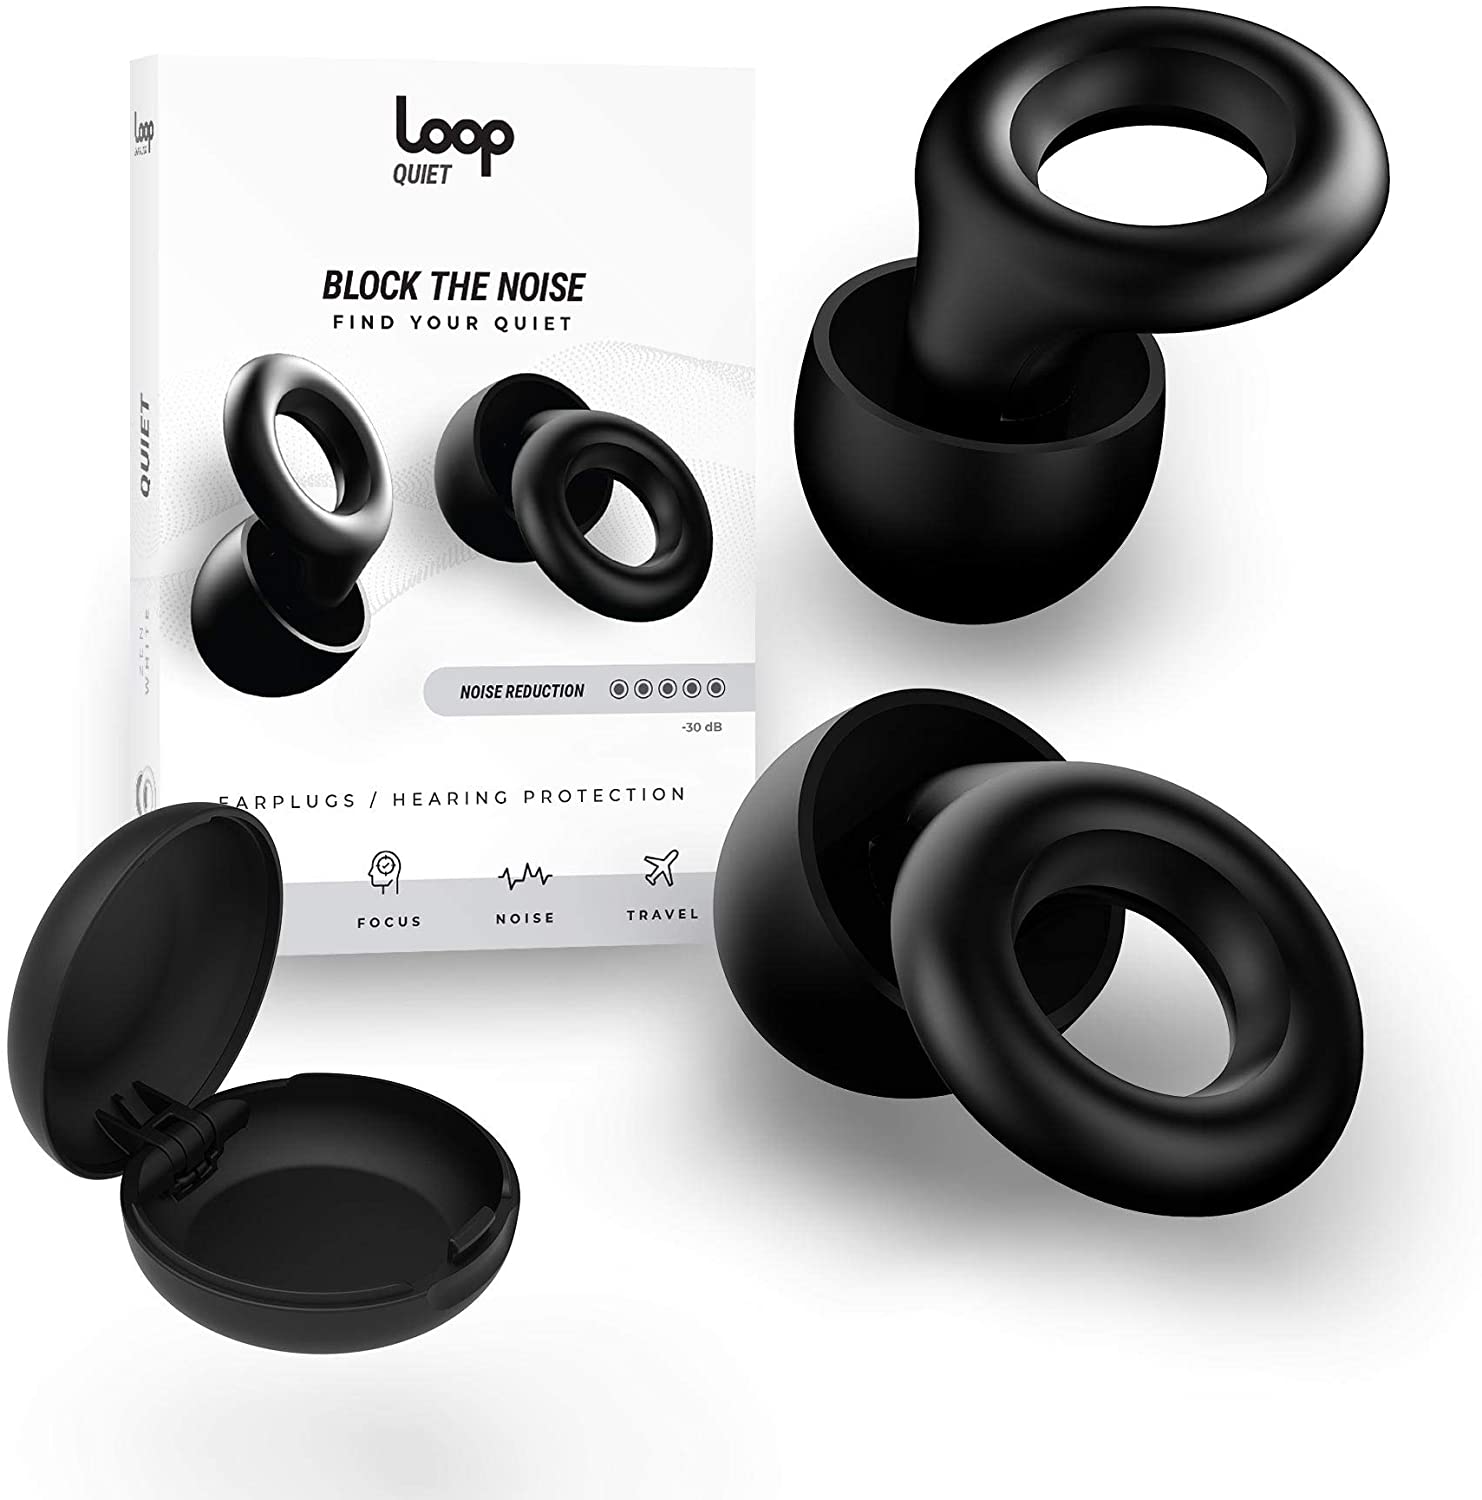 Loop Earplugs Help Block Out Noisy Home Environments